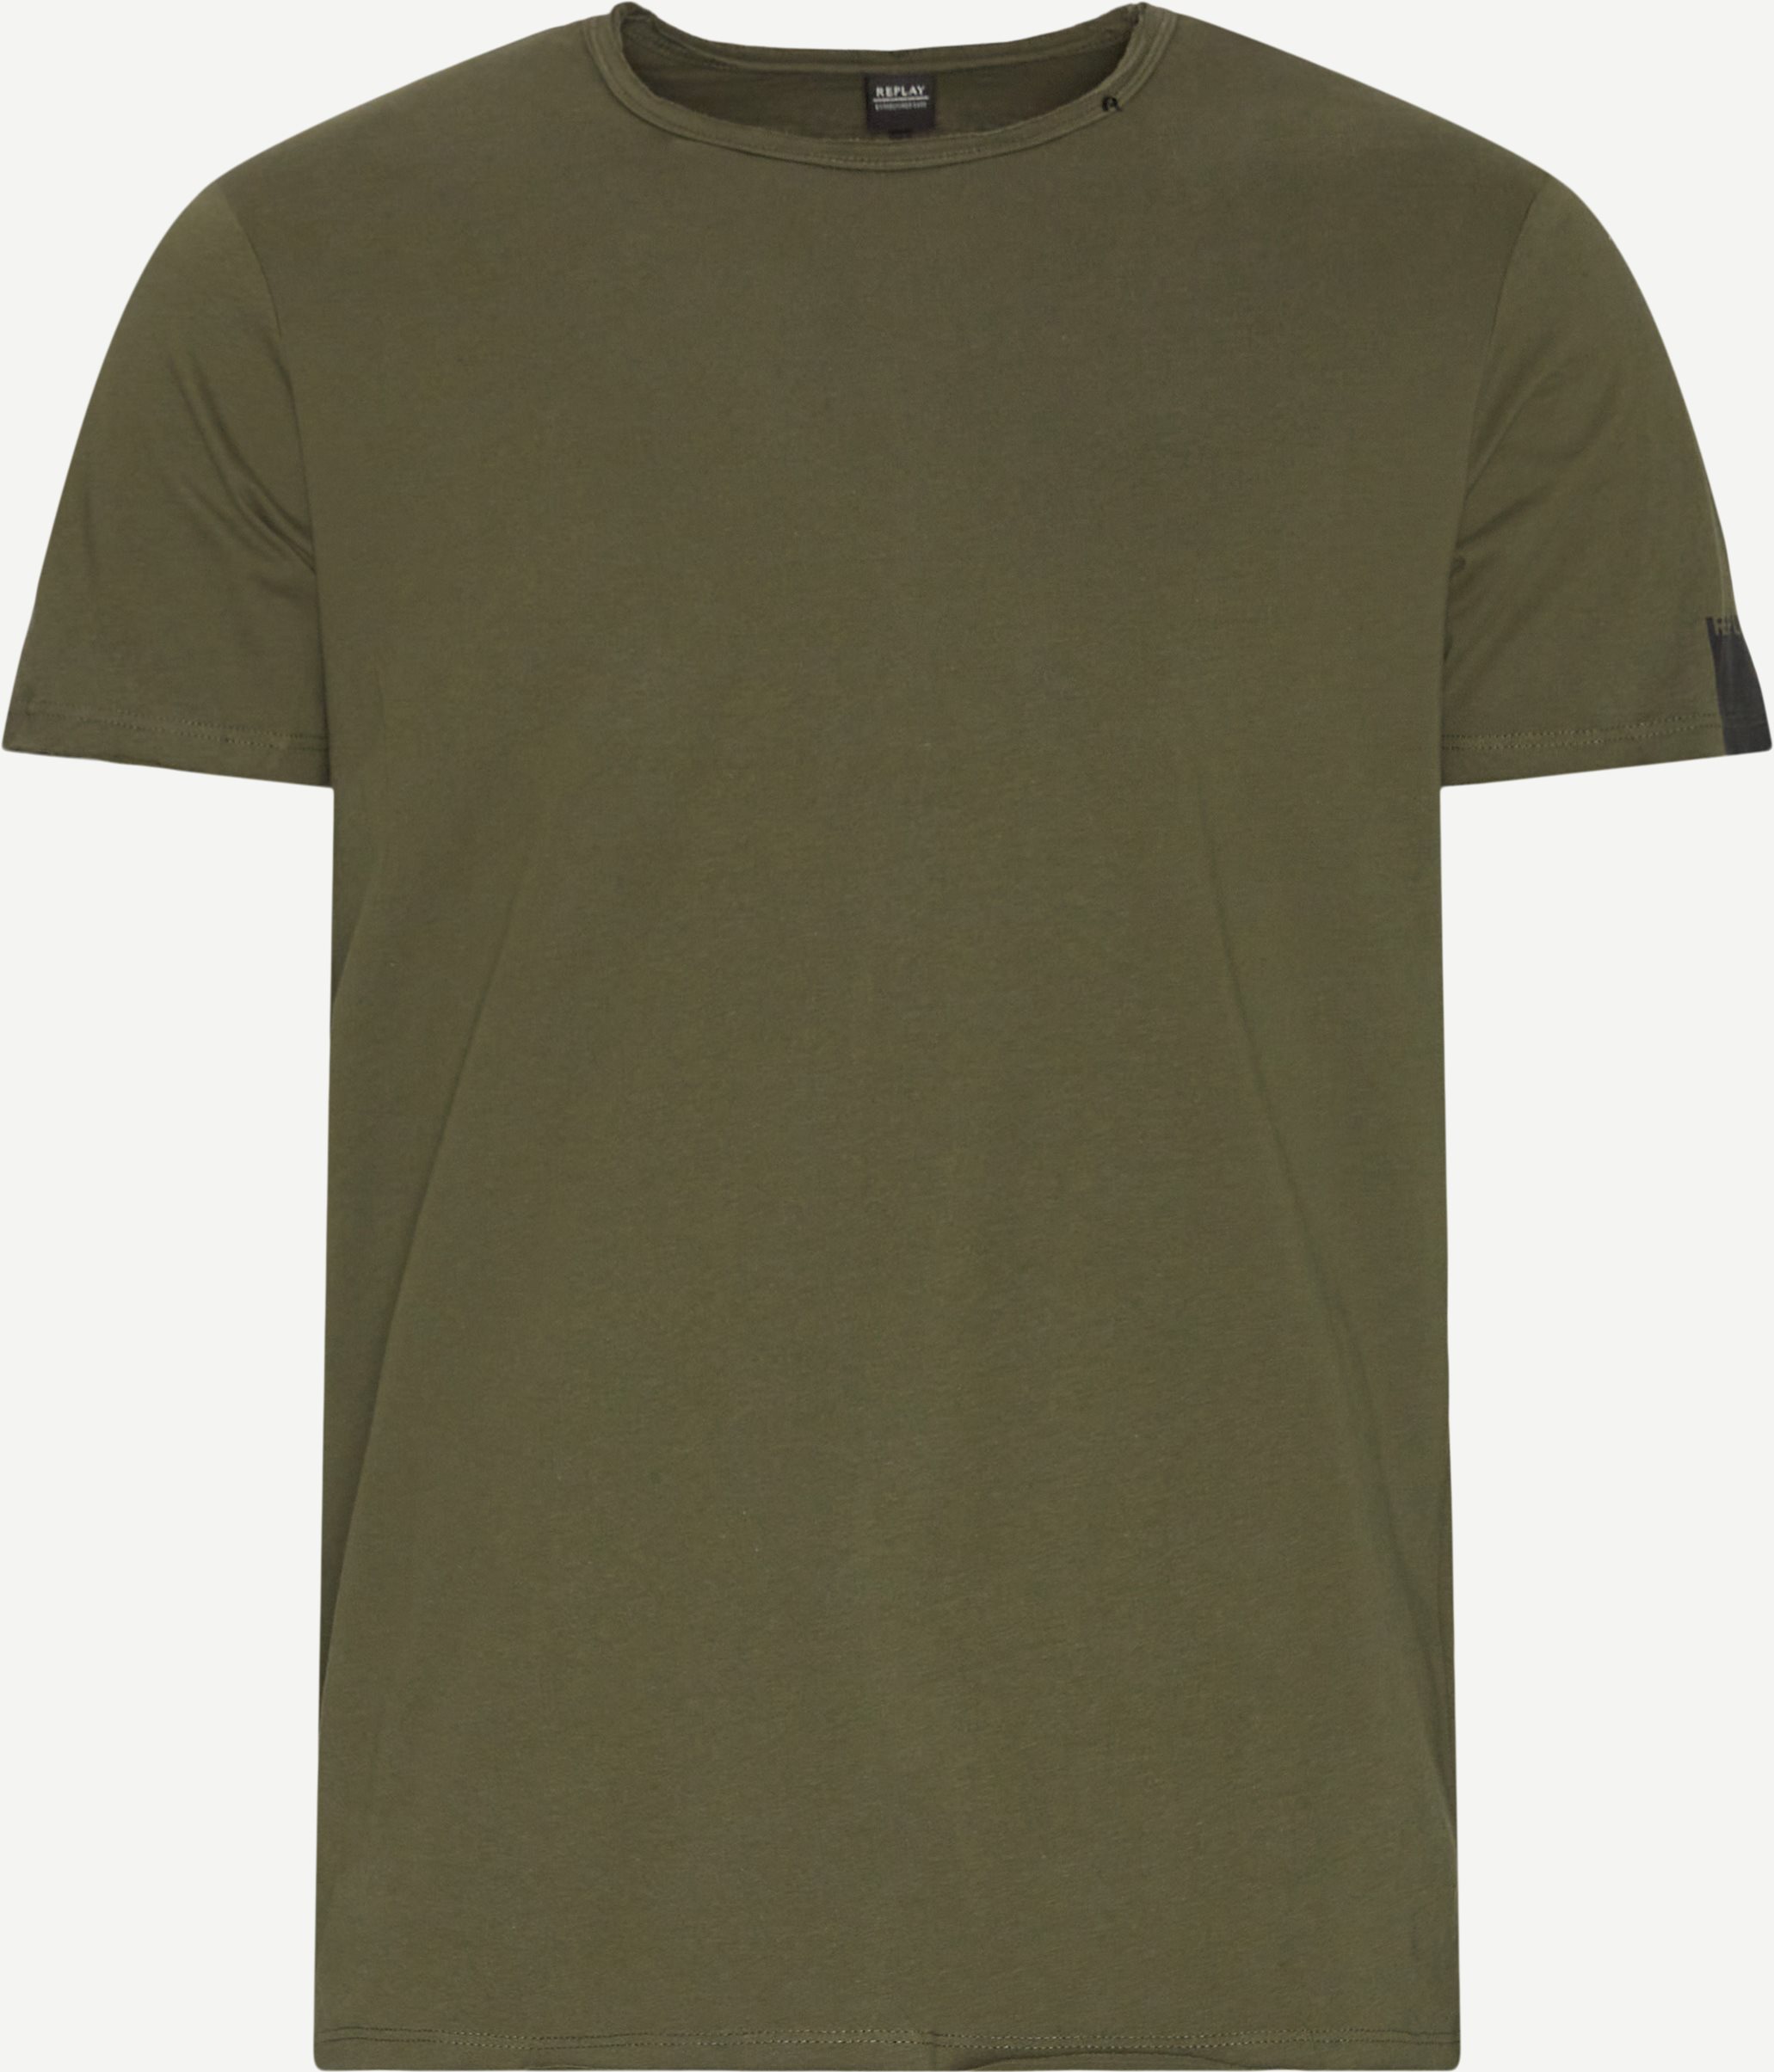 M3590 T-shirt - T-shirts - Regular fit - Army